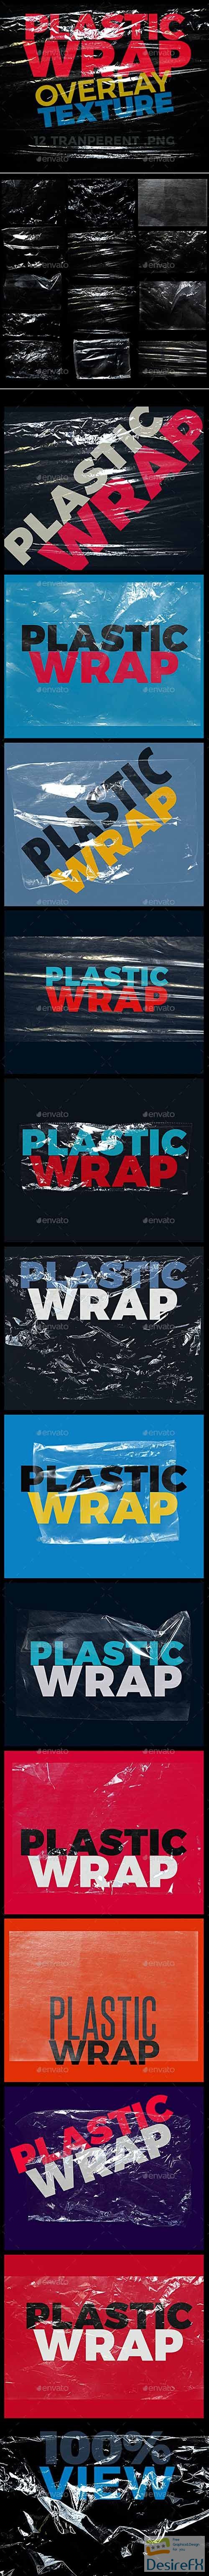 GraphicRiver - Plastic Wrap Overlay Texture 29714507